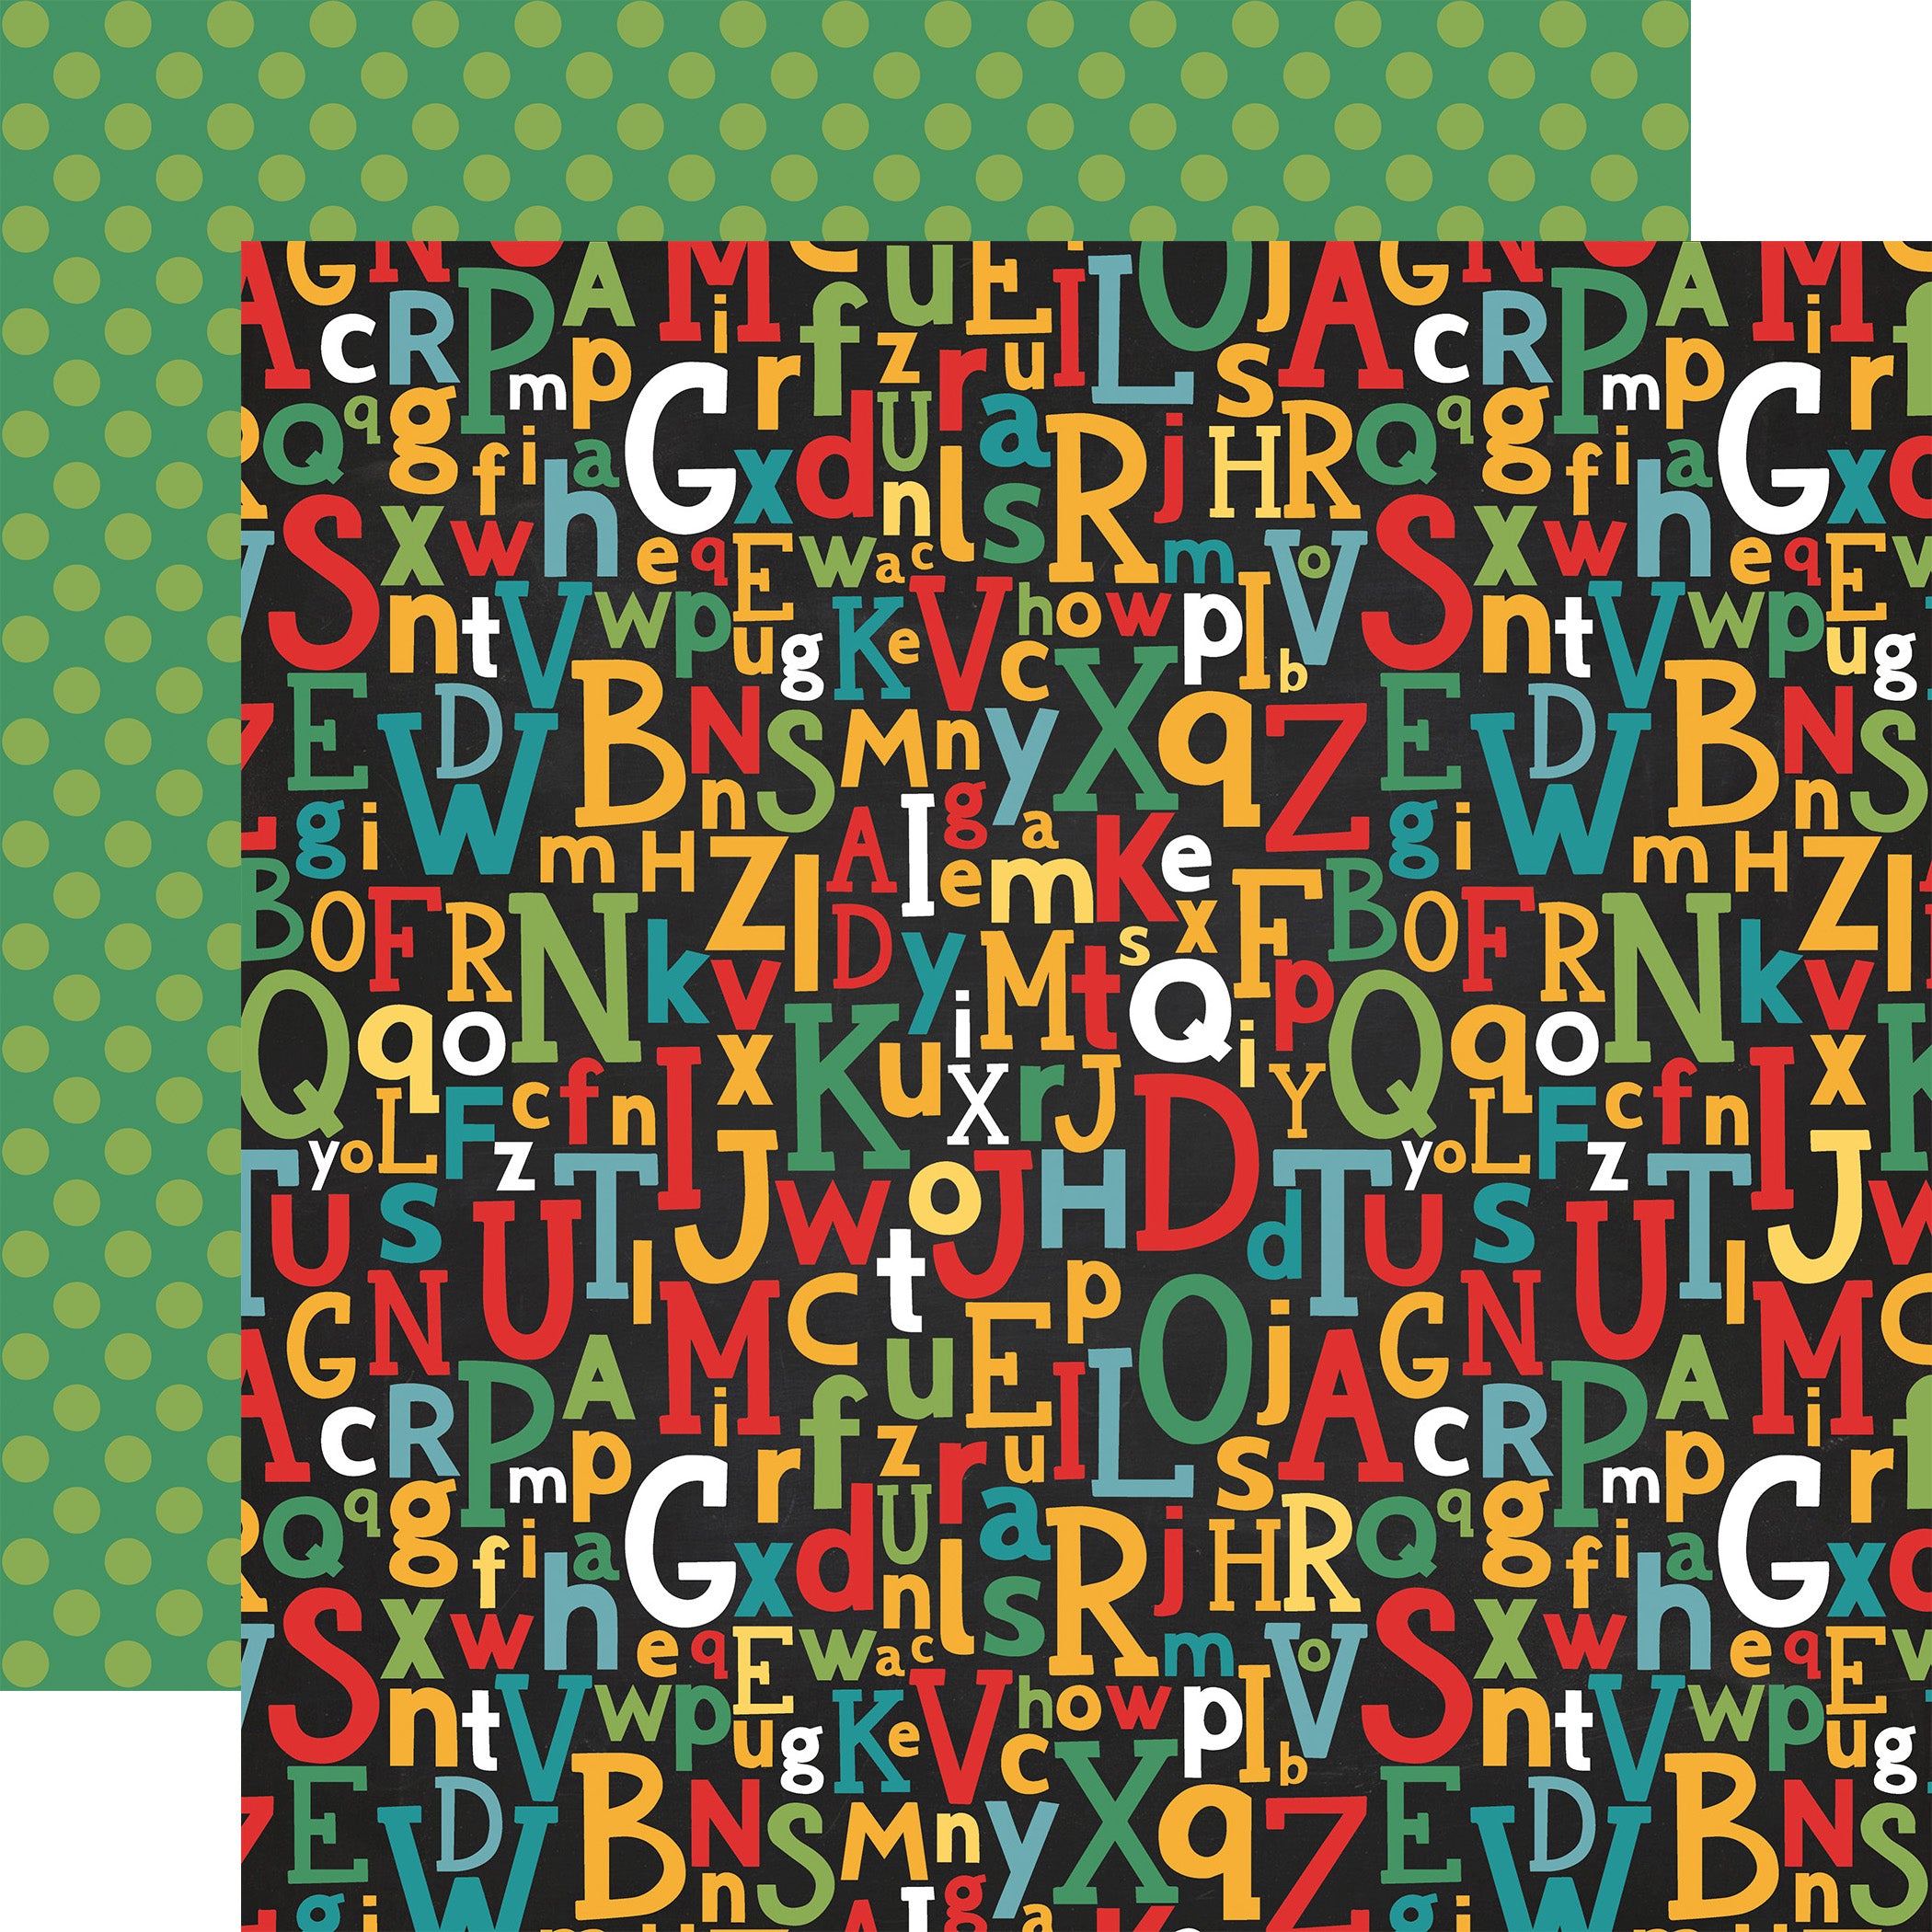 Echo Park Back To School Alphabet Scramble 12 x 12 Double-Sided Scrapbook Paper